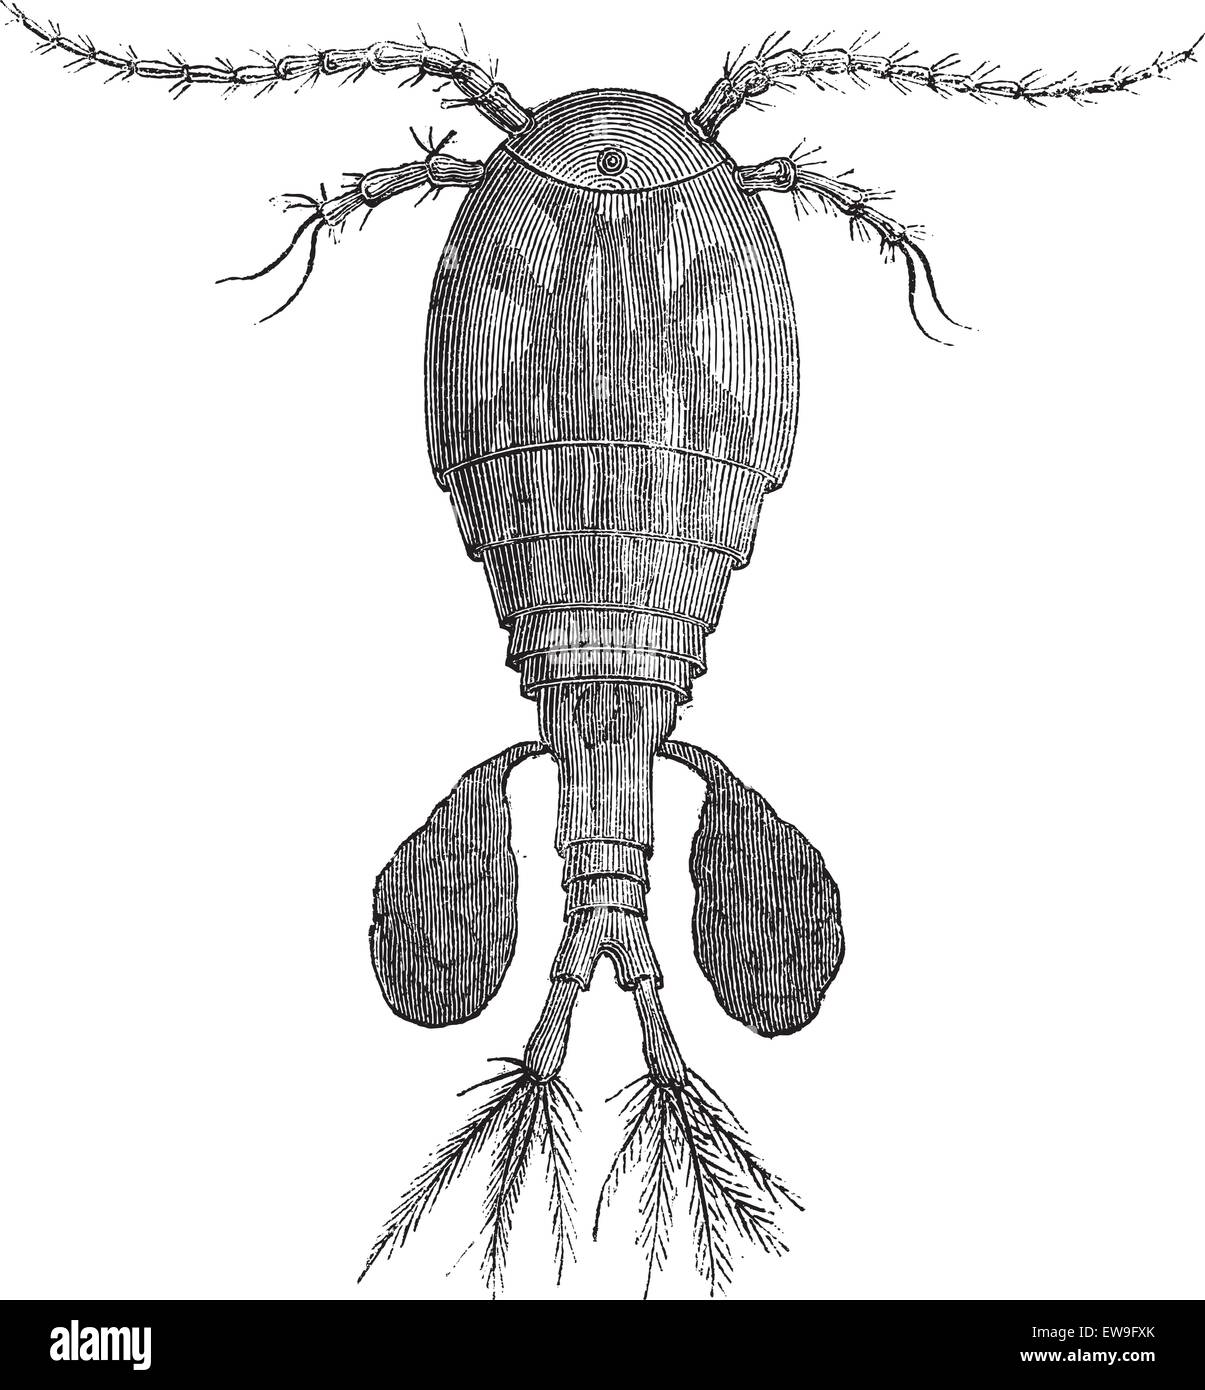 Süßwasser Copepoden oder Cyclops SP., graviert Vintage Illustration. Le Magasin Pittoresque - Larive und Fleury - 1874 Stock Vektor